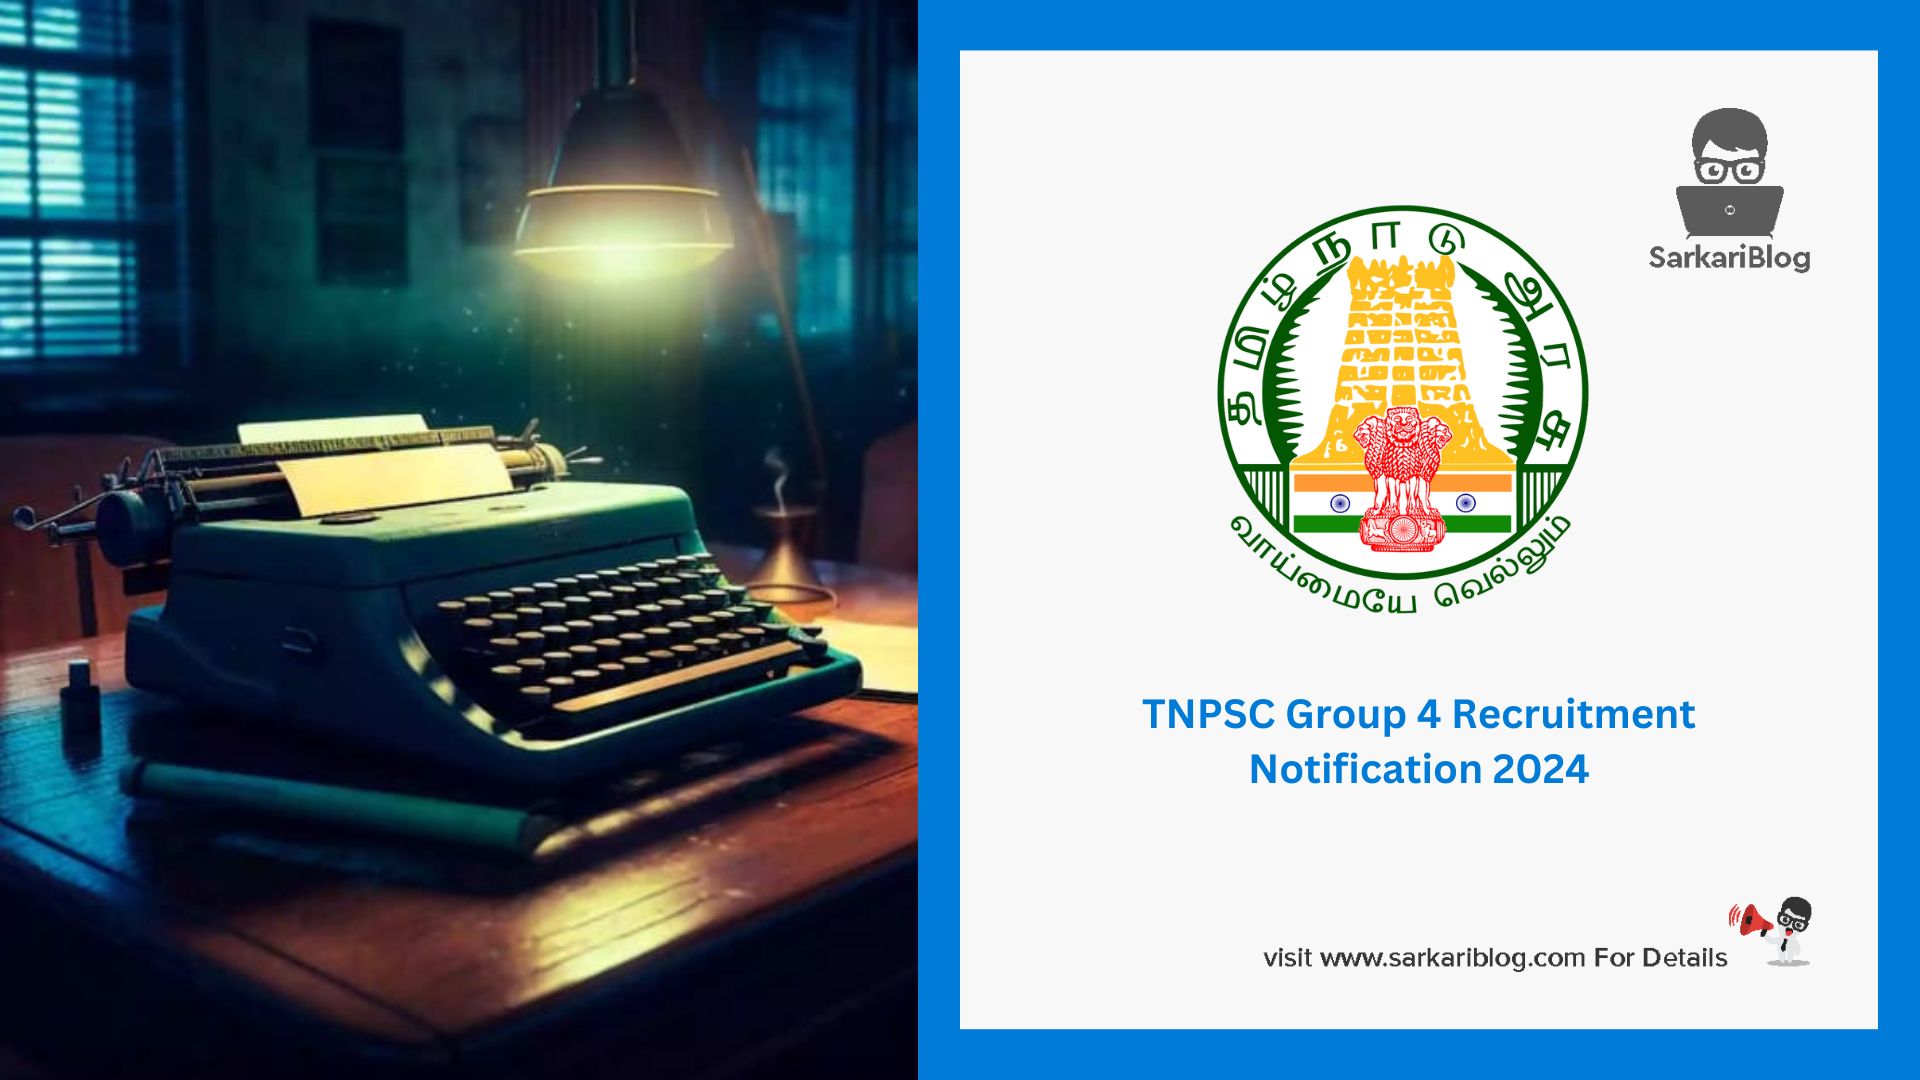 TNPSC Group 4 recruitment notification 2024